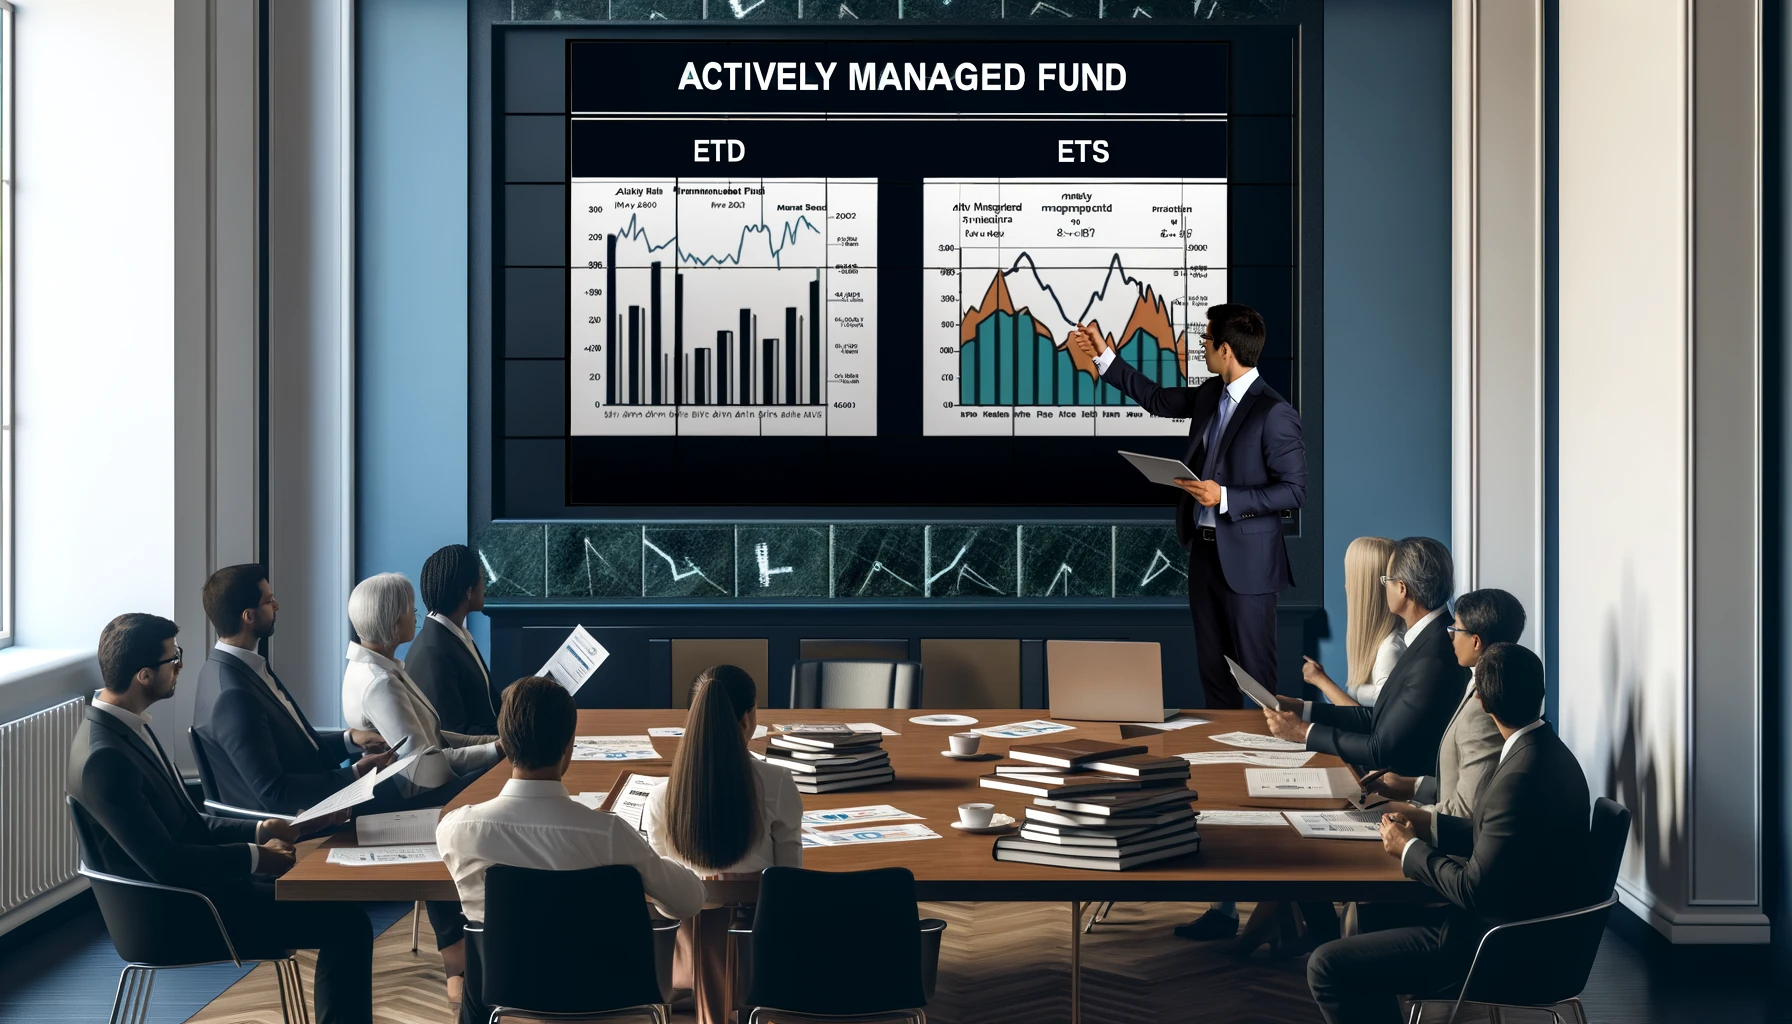 Aktiv gemanagte Fonds vs ETF